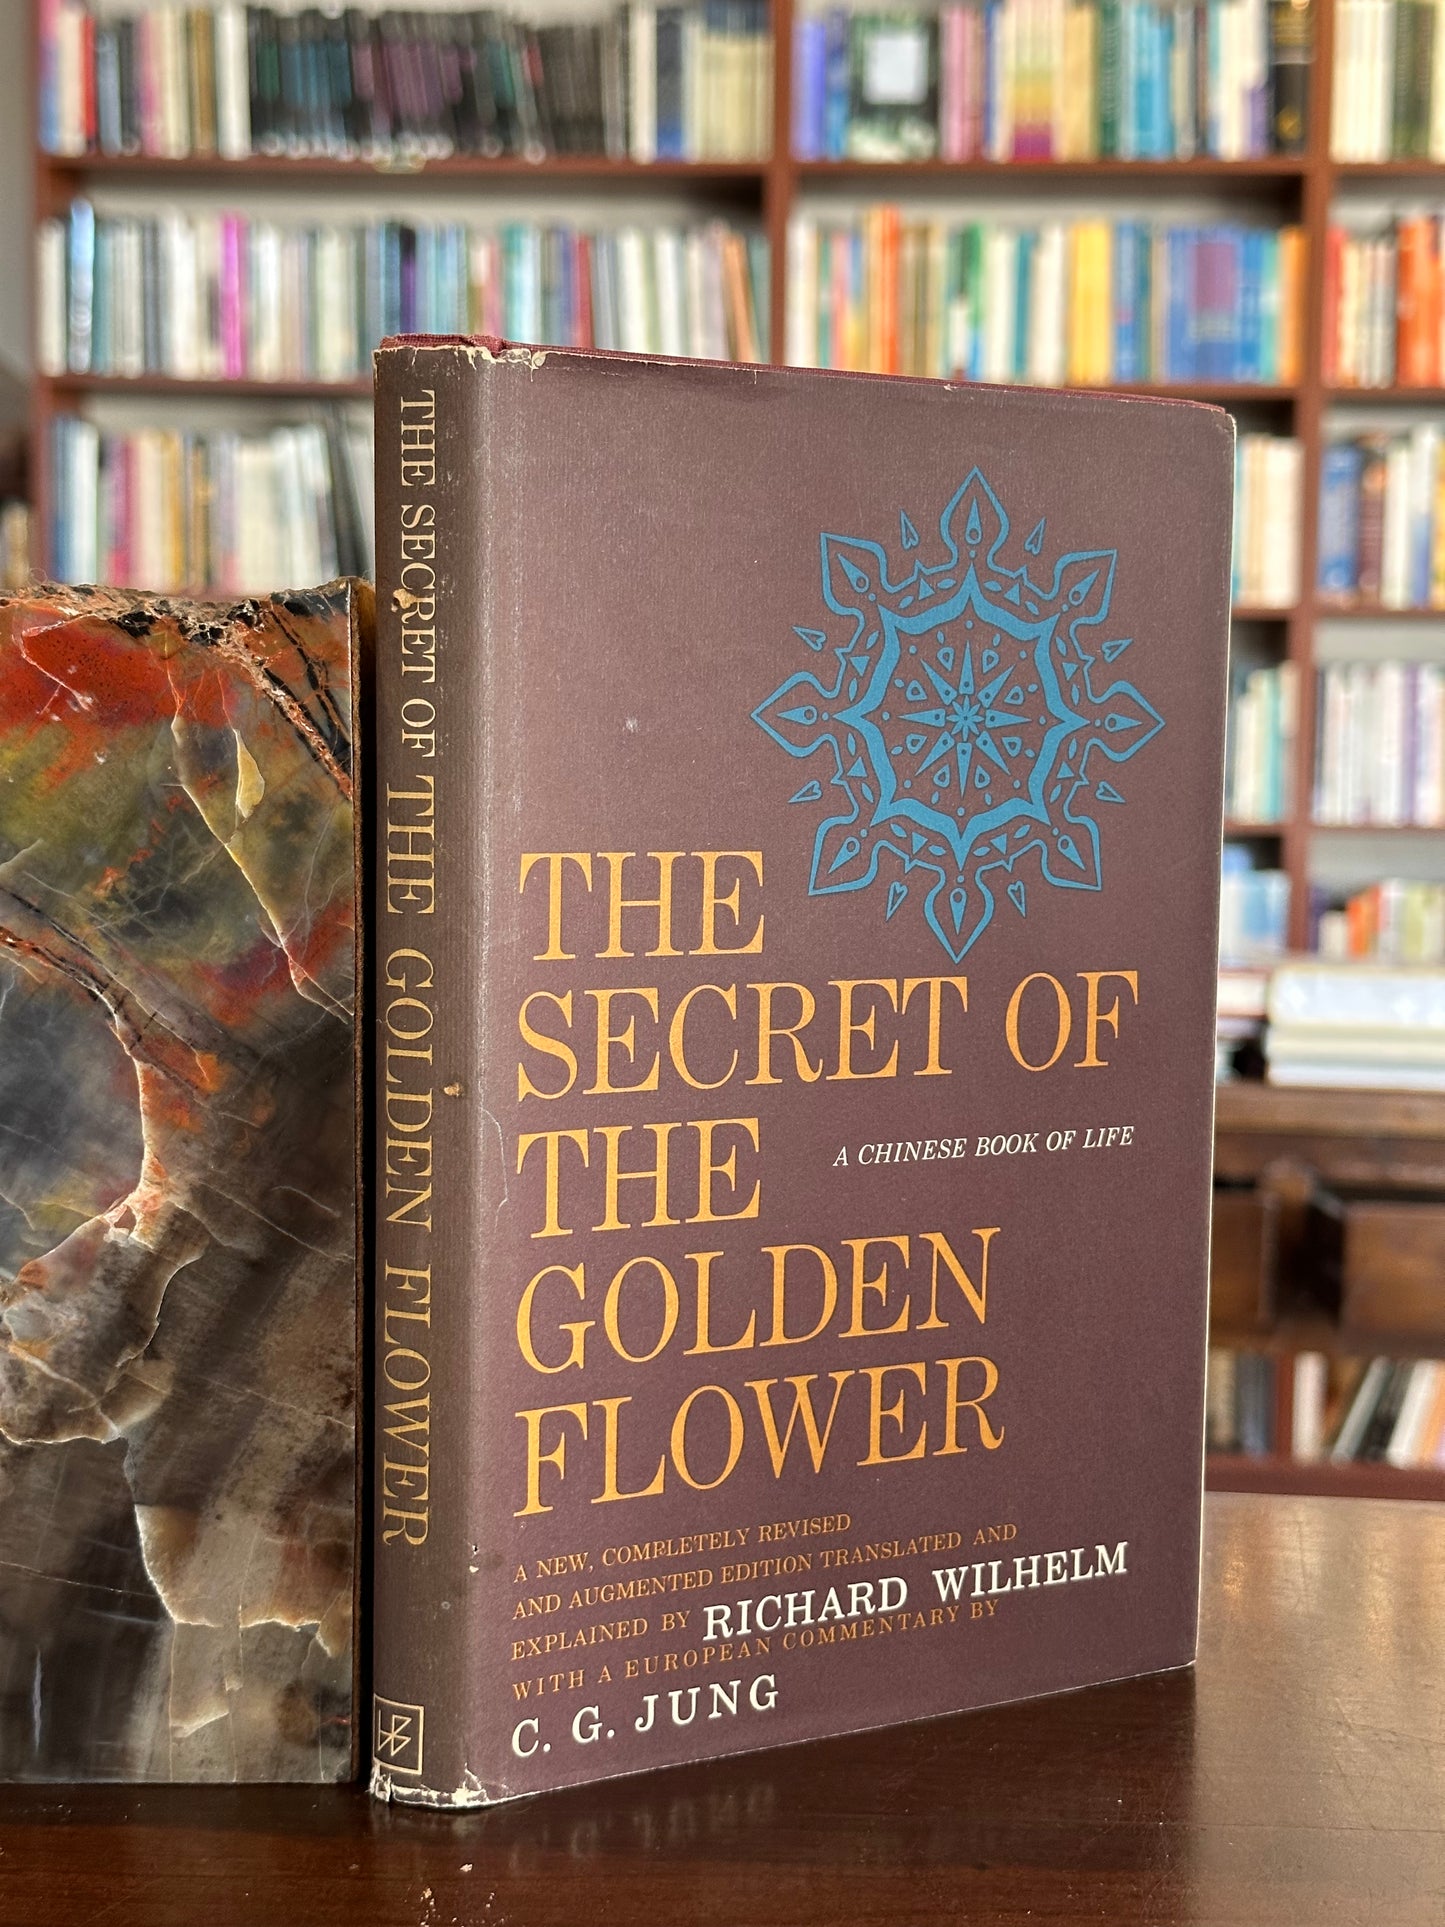 The Secret of The Golden Flower by Richard Wilhelm